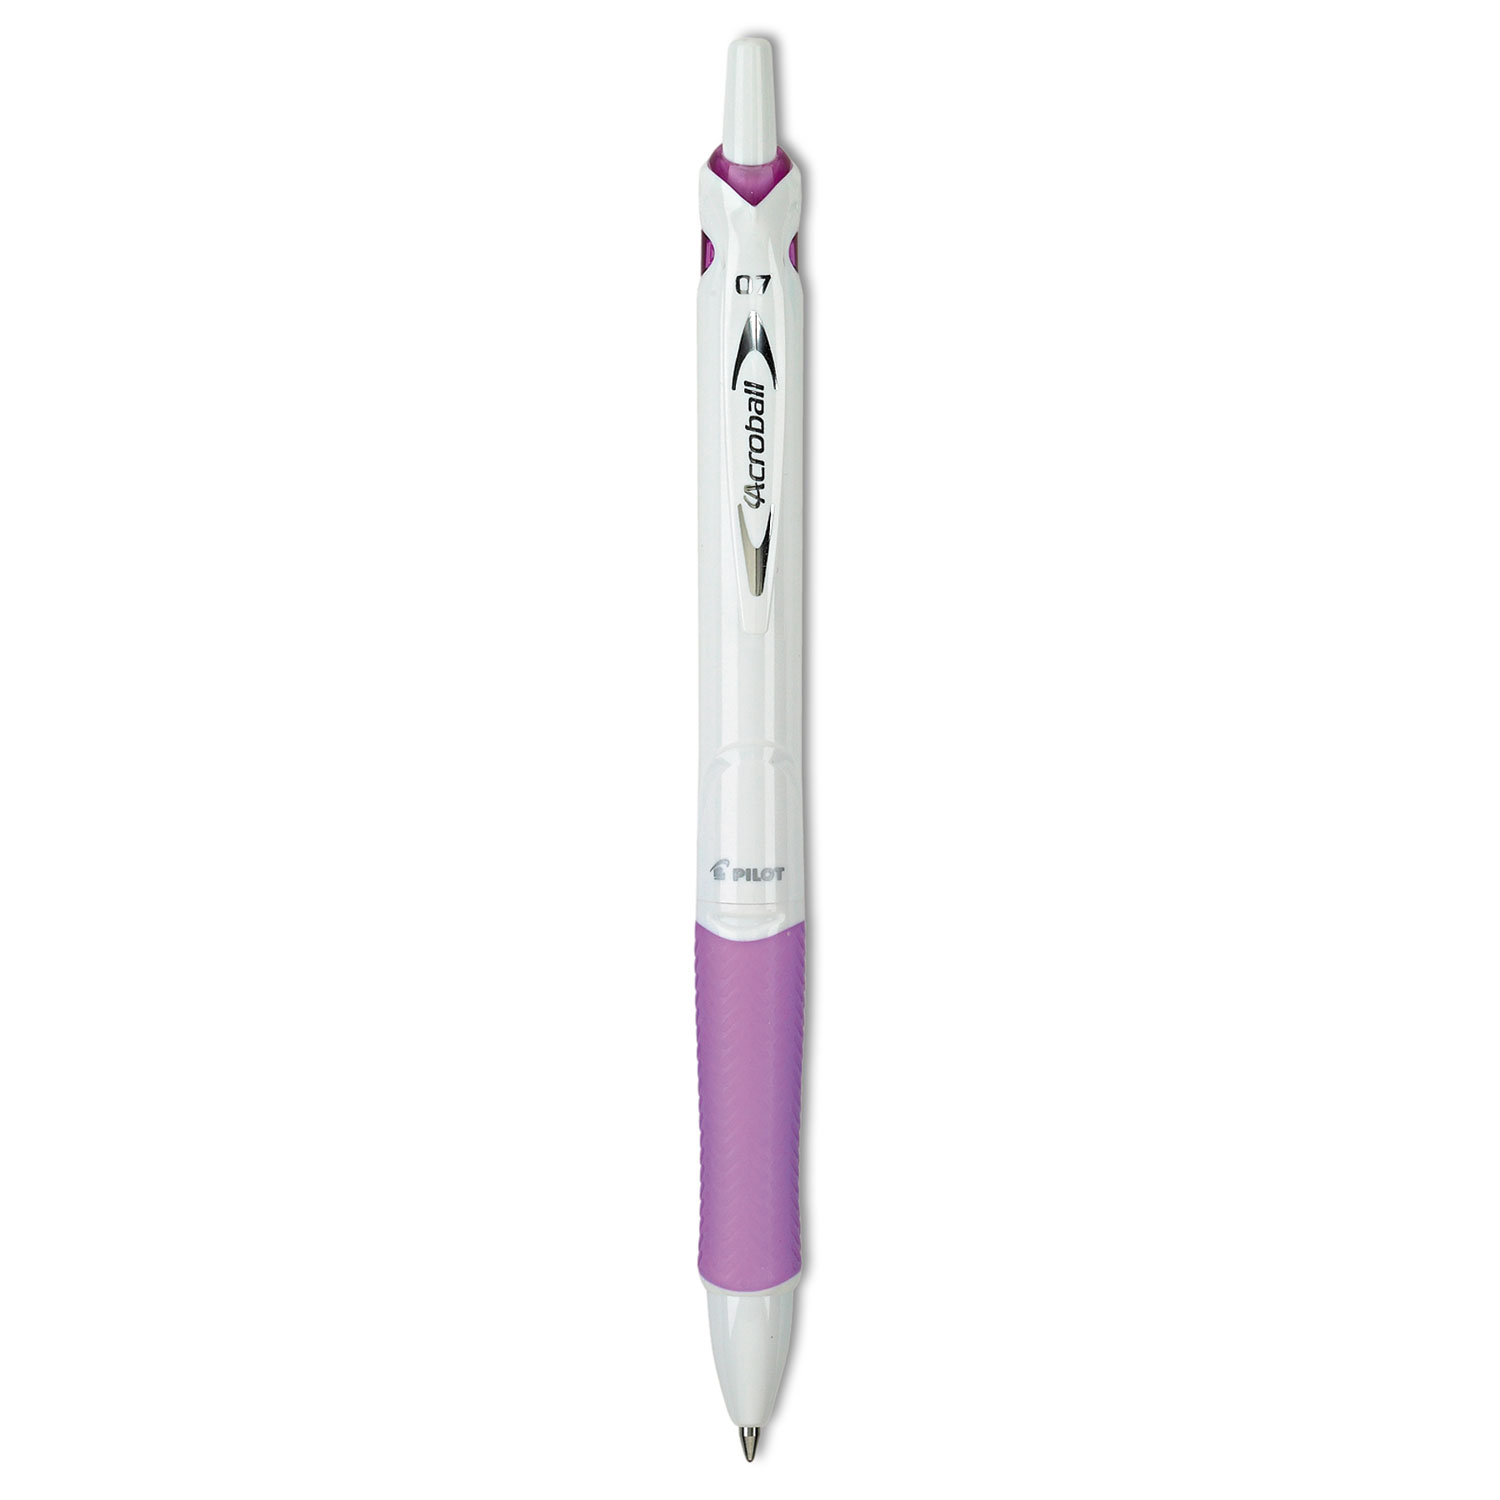  Pilot 31854 Acroball PureWhite Retractable Ballpoint Pen, 0.7mm, Black Ink, White/Purple Barrel (PIL31854) 